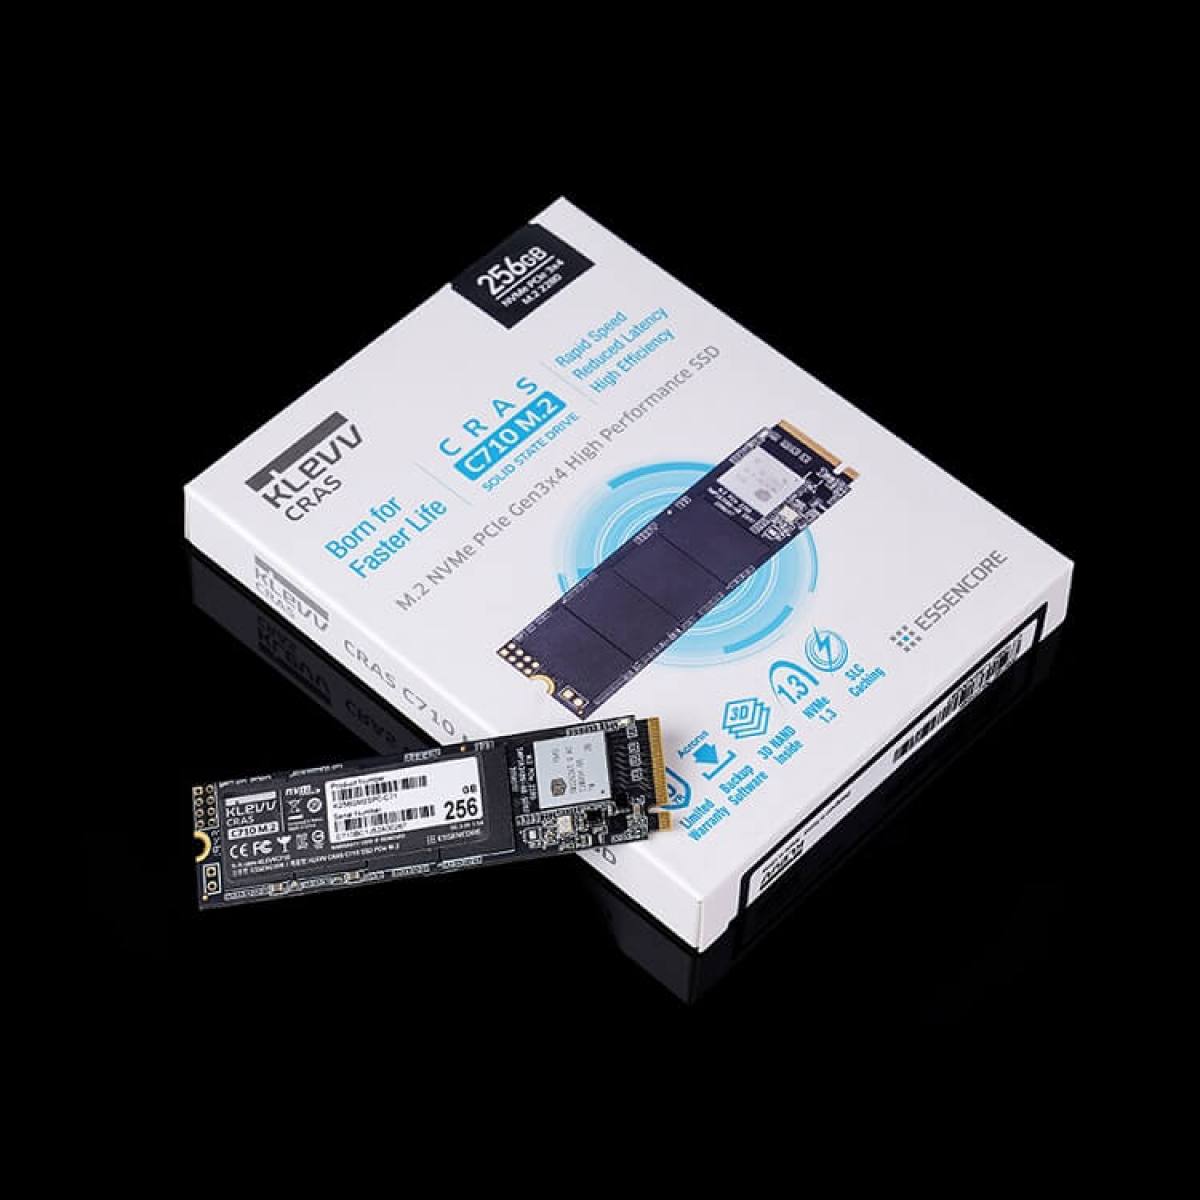 SSD NVME KLEVV CRAS C710 256GB – M2 2280